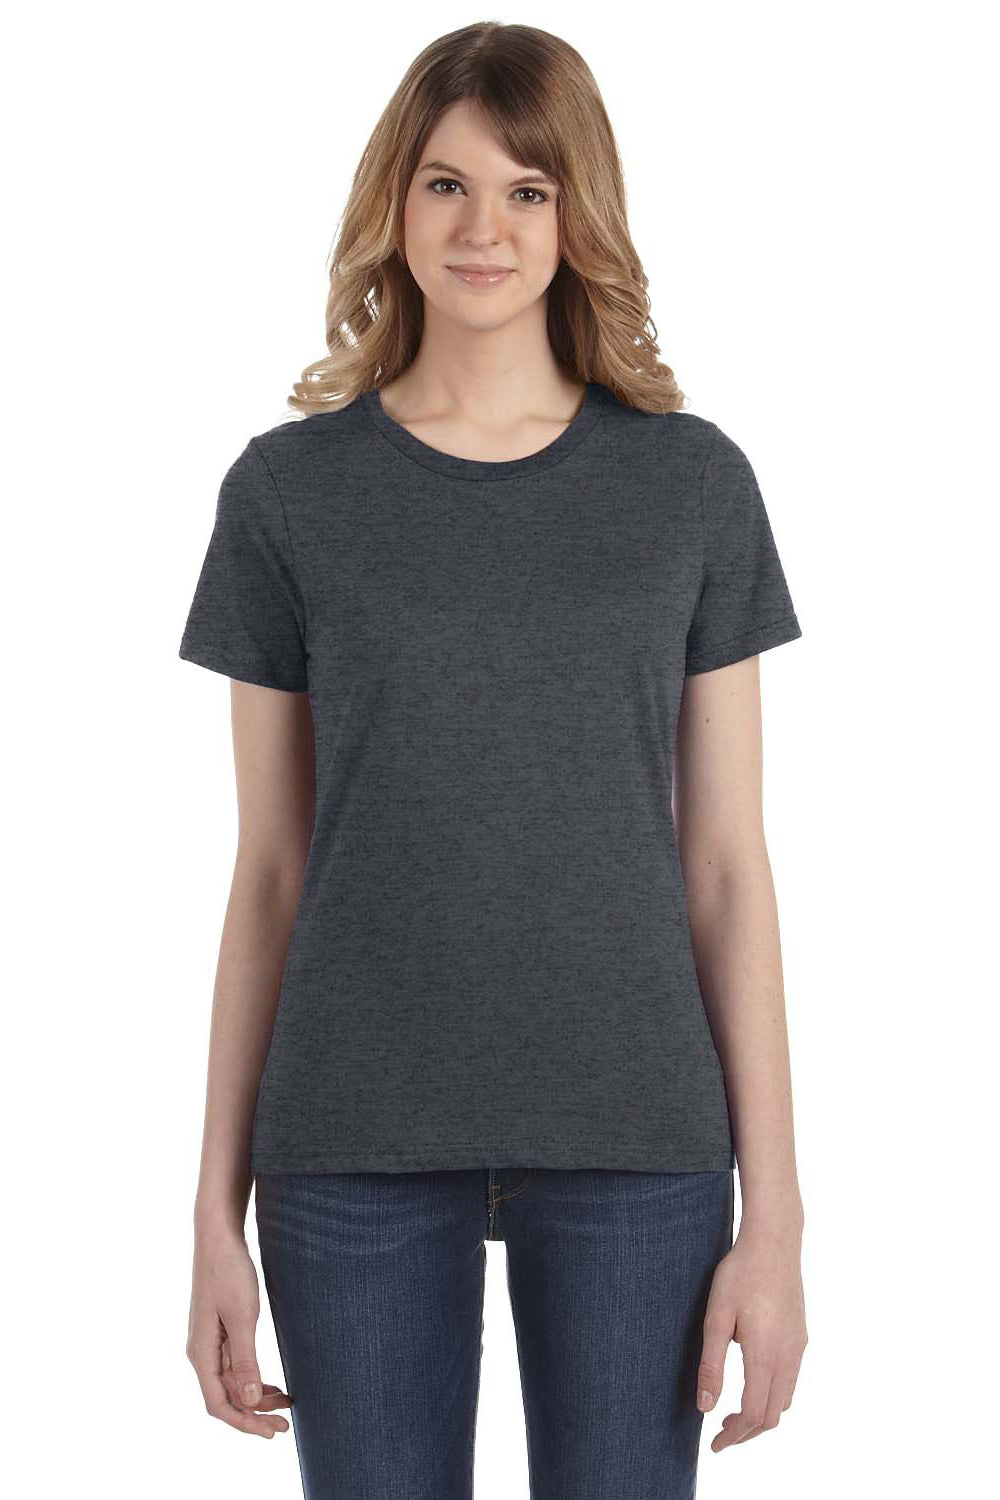 Anvil 880 Womens Short Sleeve Crewneck T-Shirt Heather Dark Grey Front